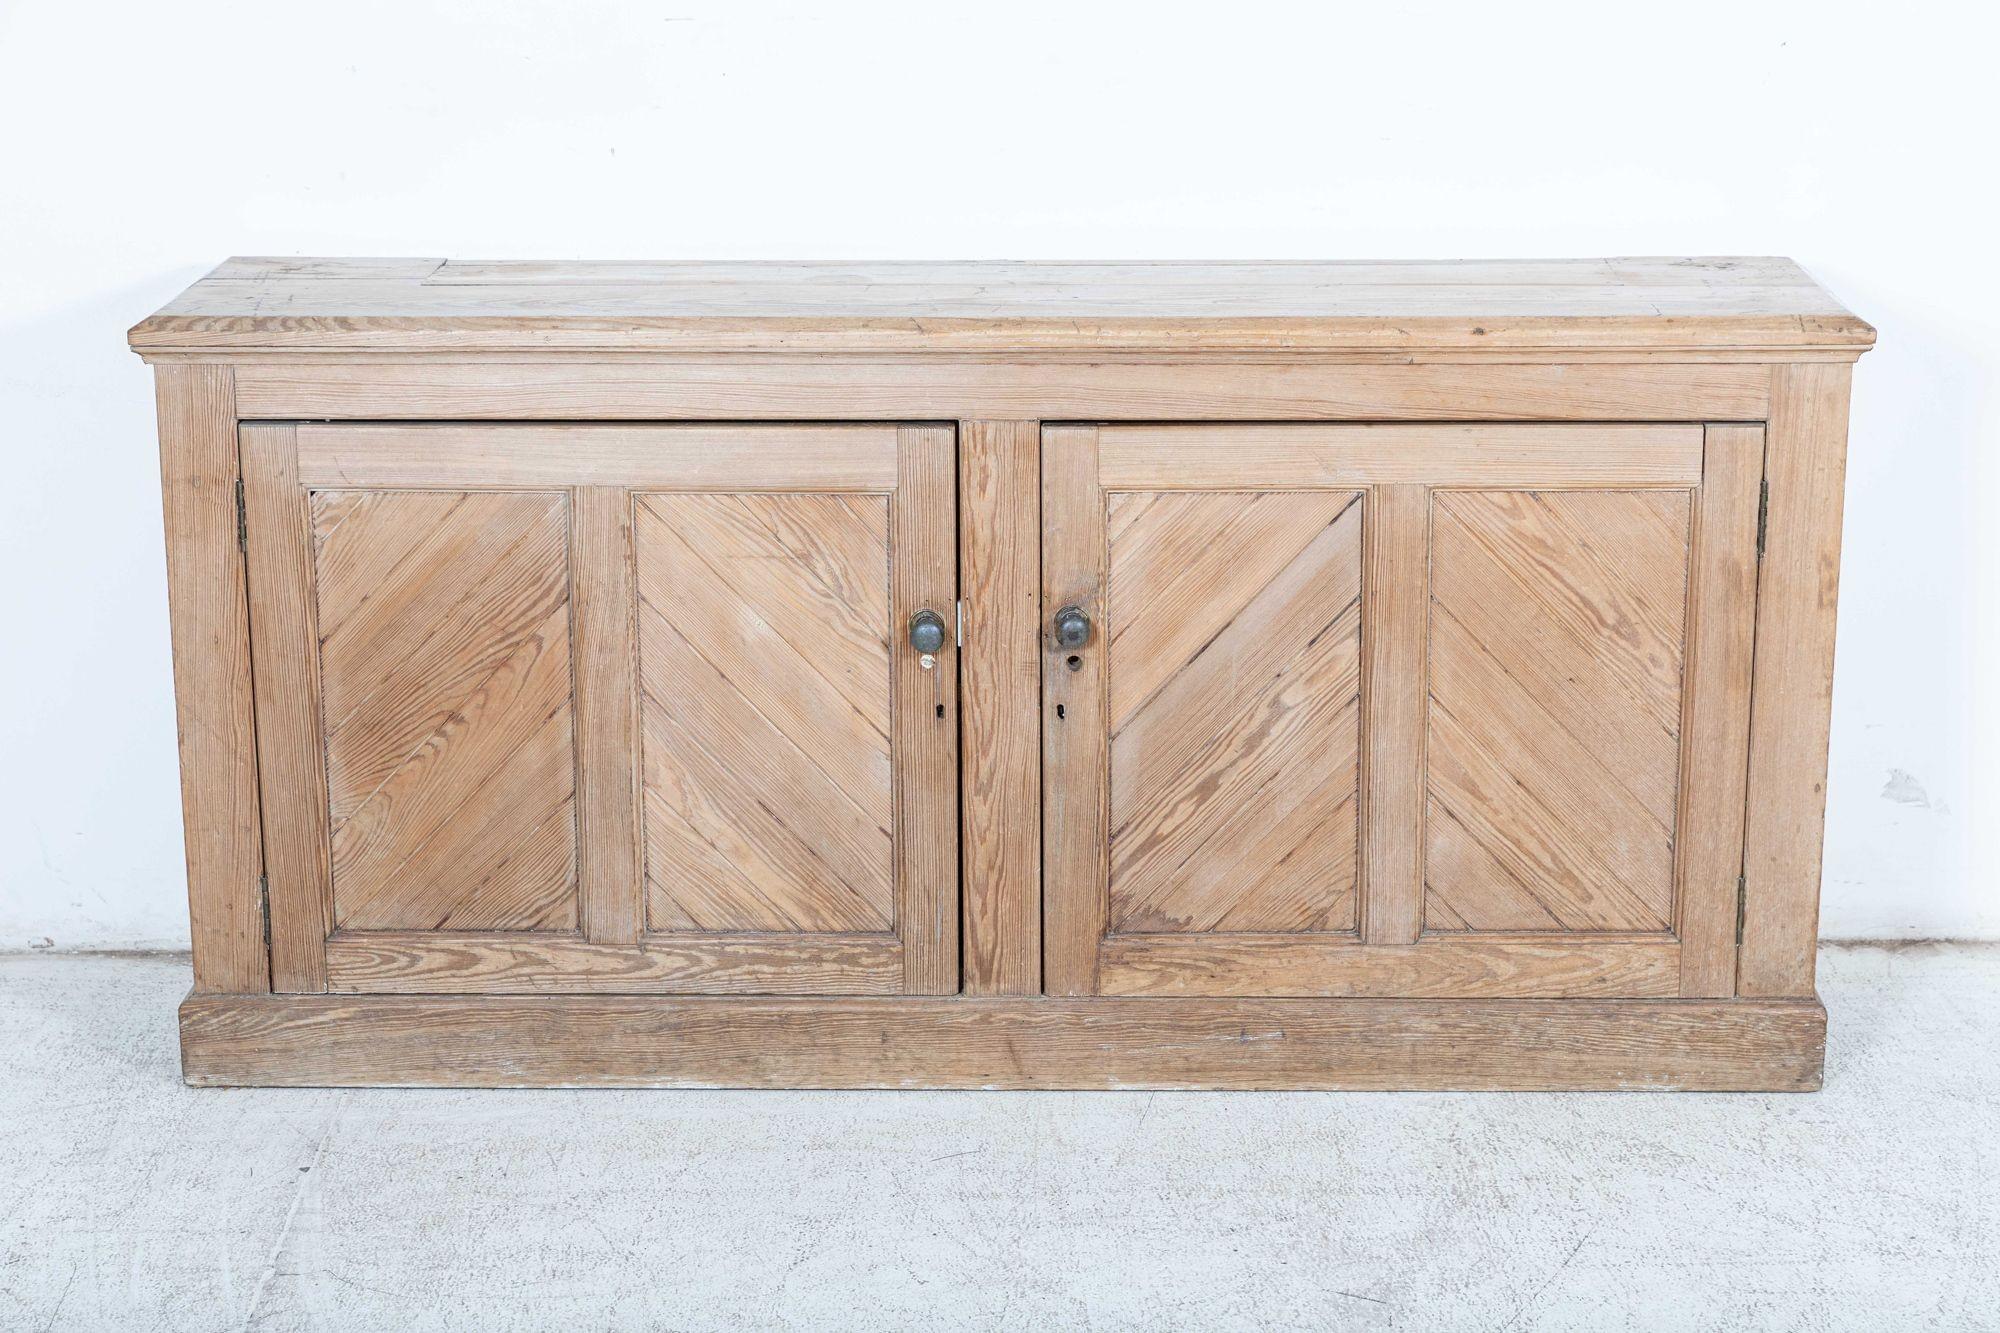 Circa 1860
Large 19th C English pine paneled dresser base
sku 1081
Measures: W187 x D41 x H88 cm.